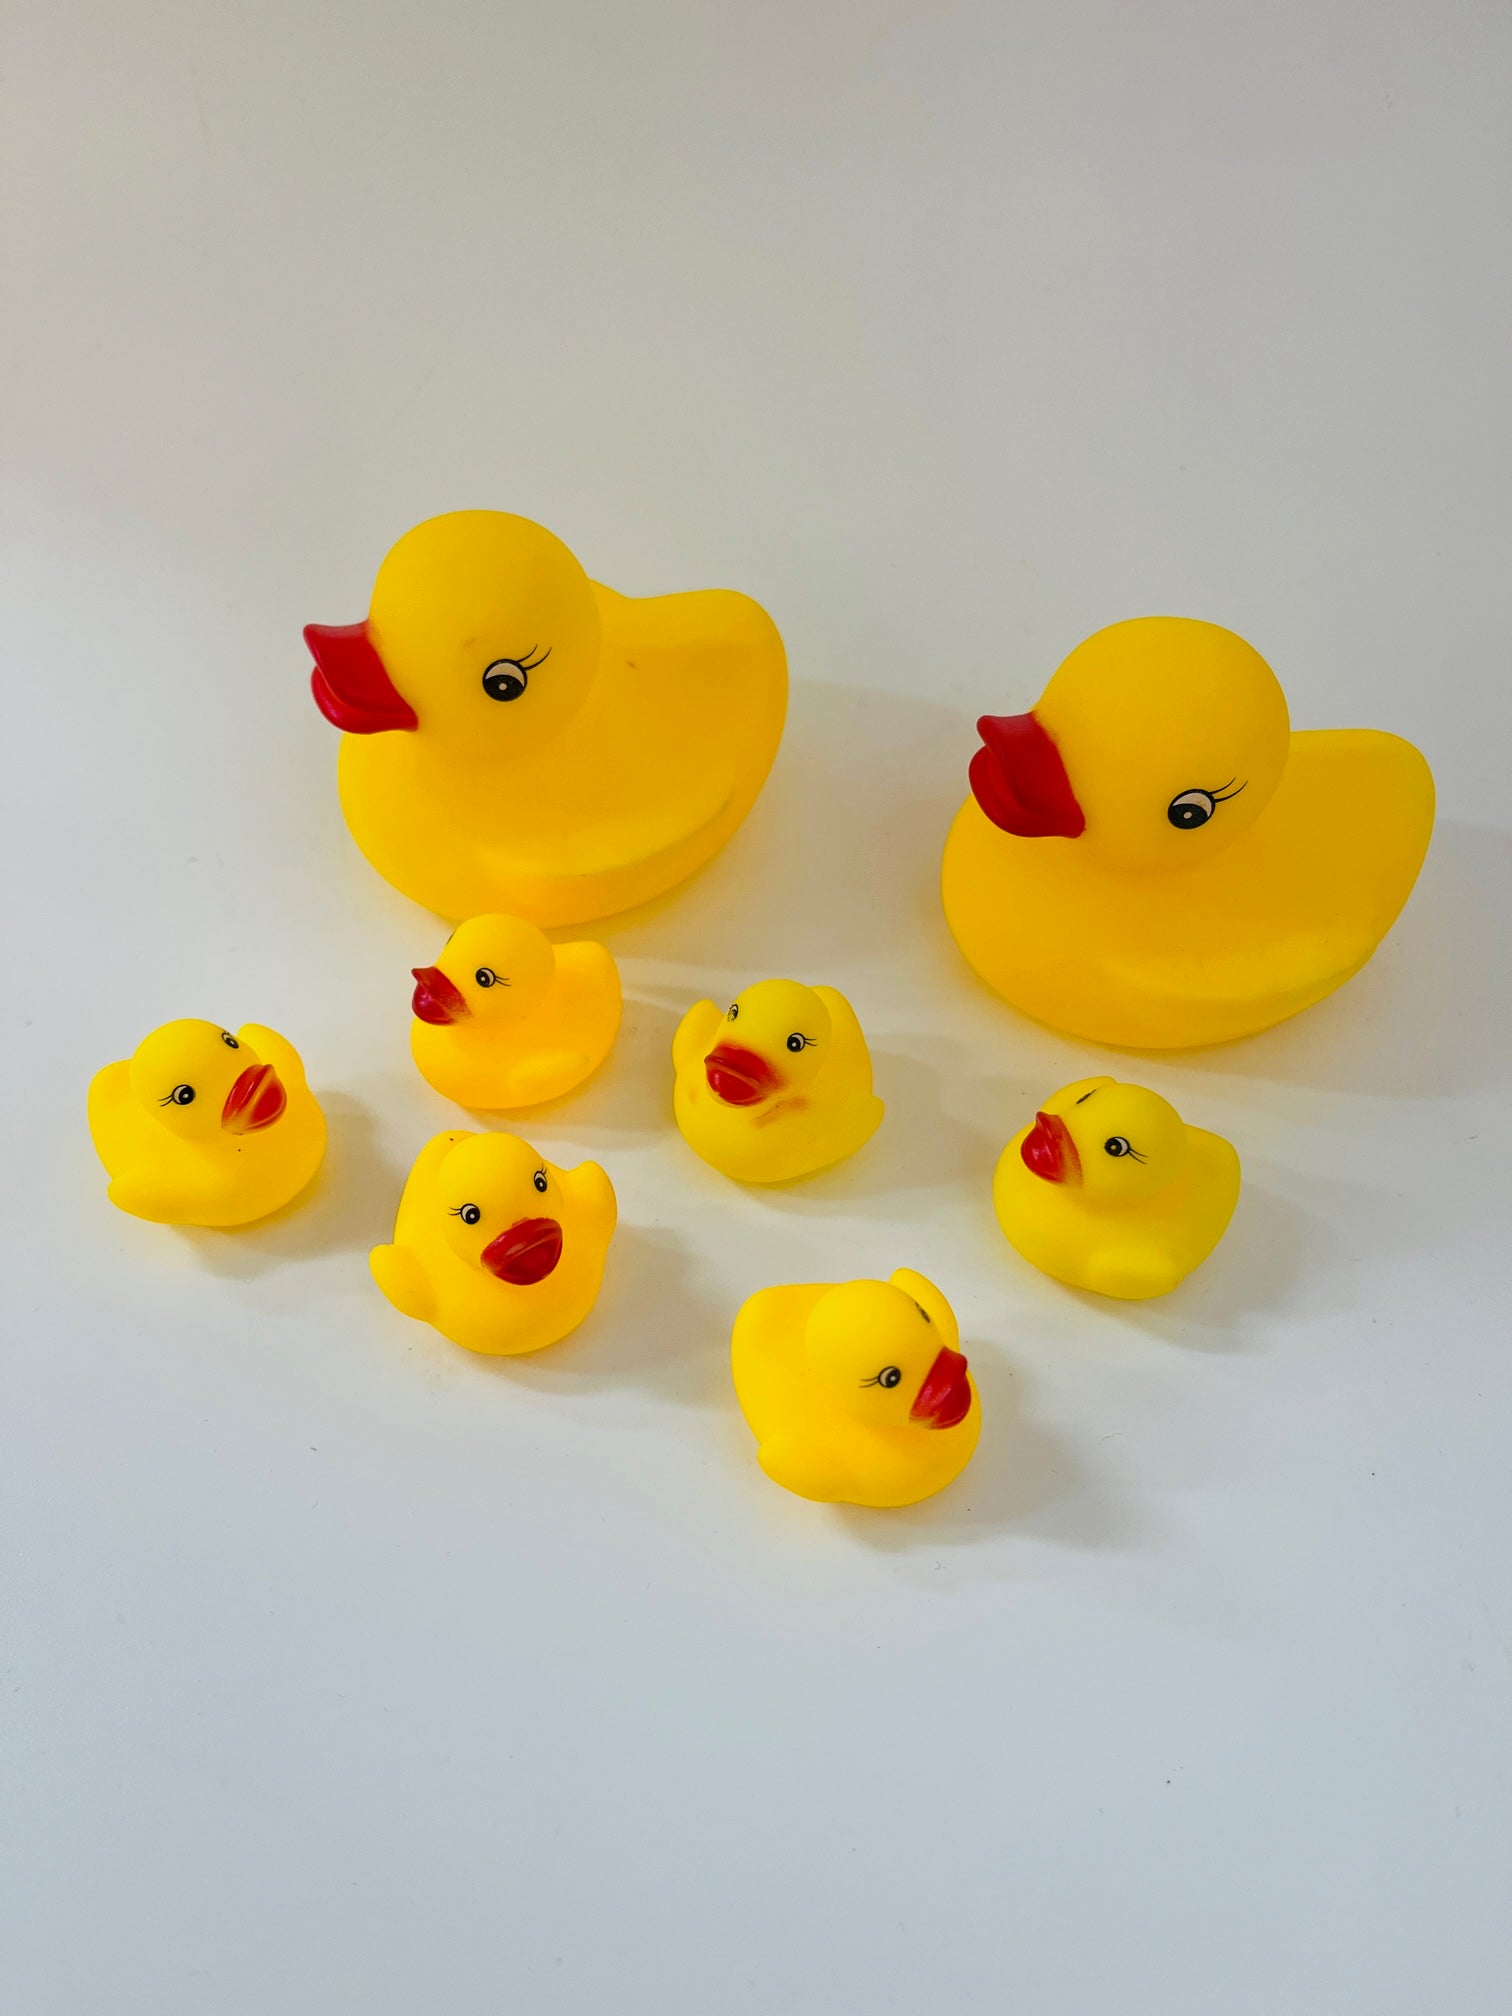 Bath Duck family set of 8 ducks 2 large 6 small